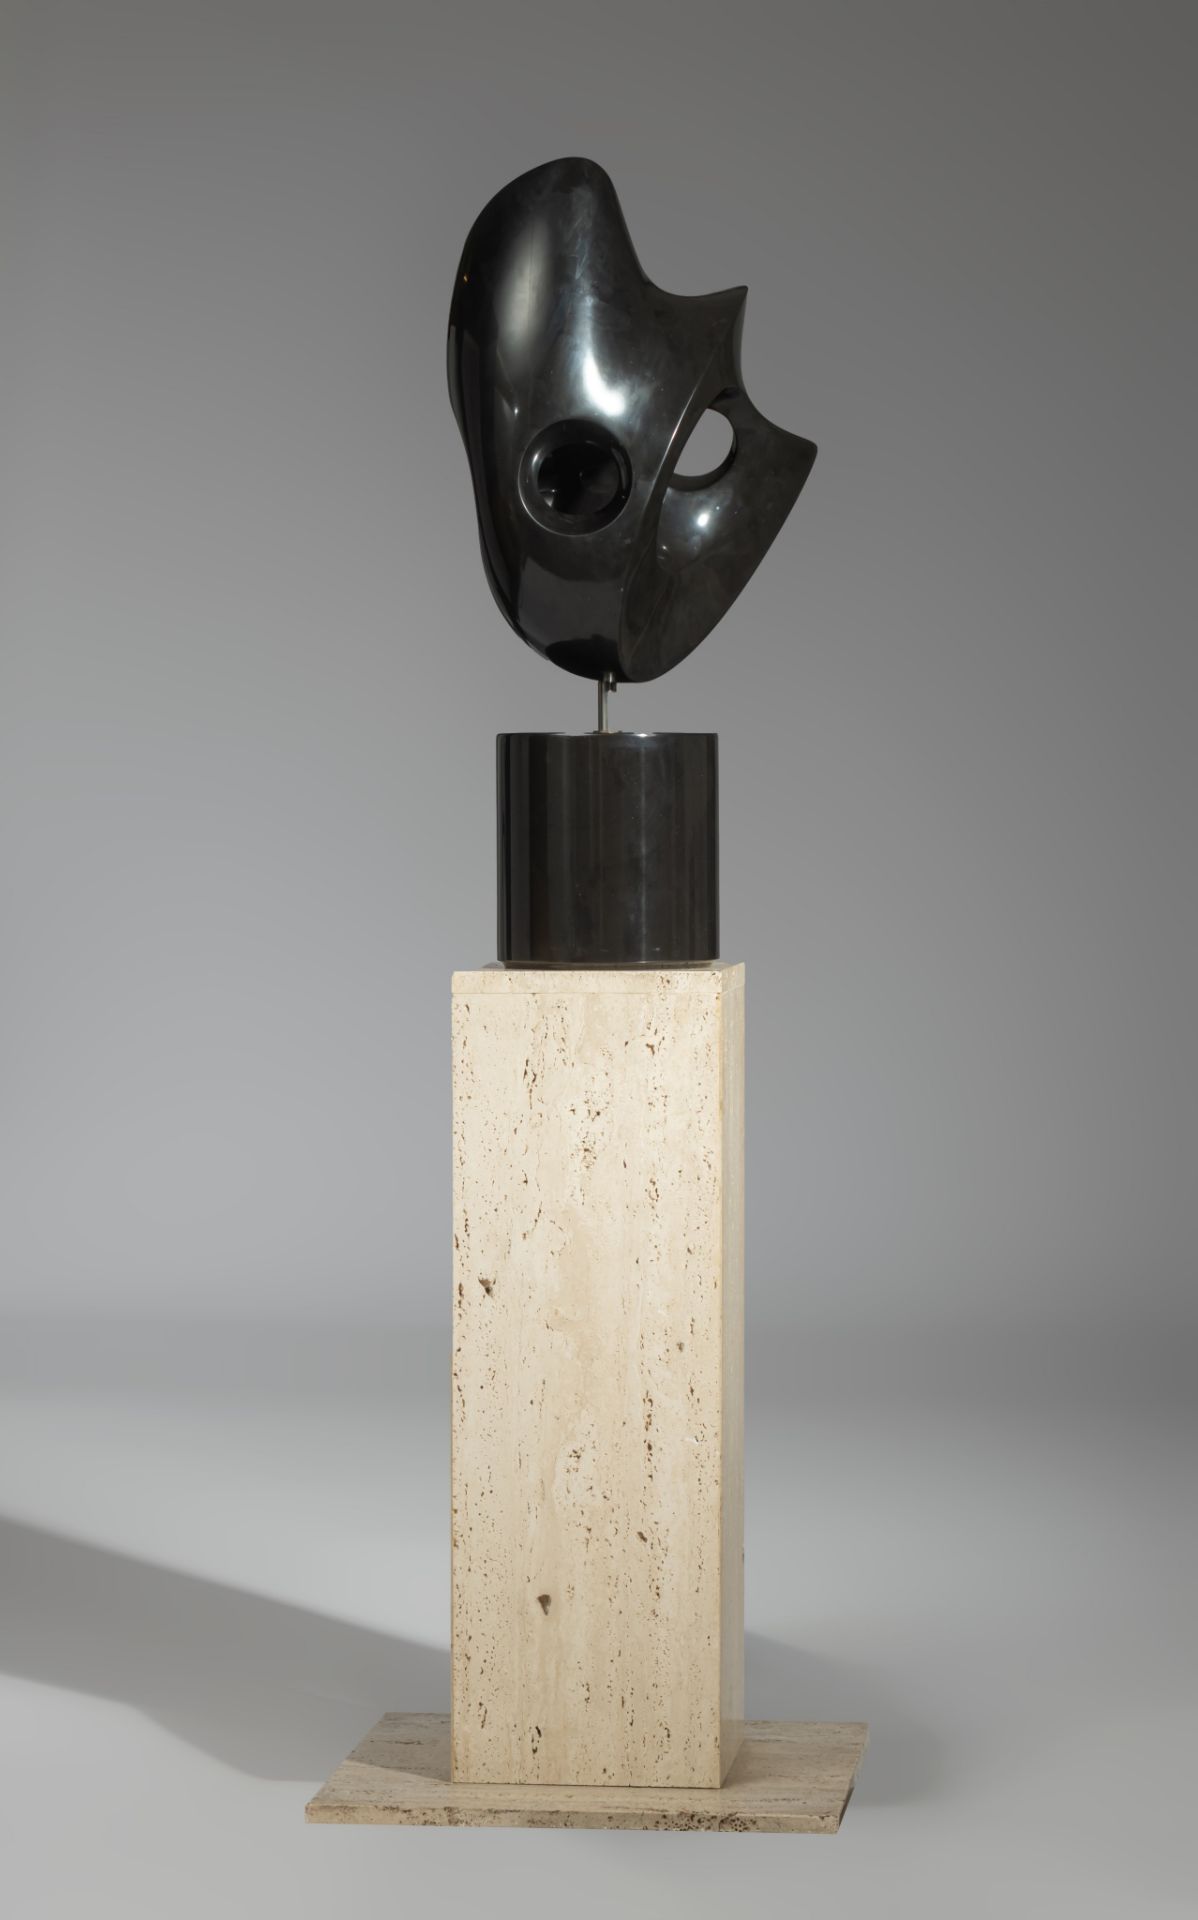 Jeanine Behaeghel (1940-1993), abstract sculpture, 1988, noir Belge marble on a travertine pedestal, - Image 13 of 18